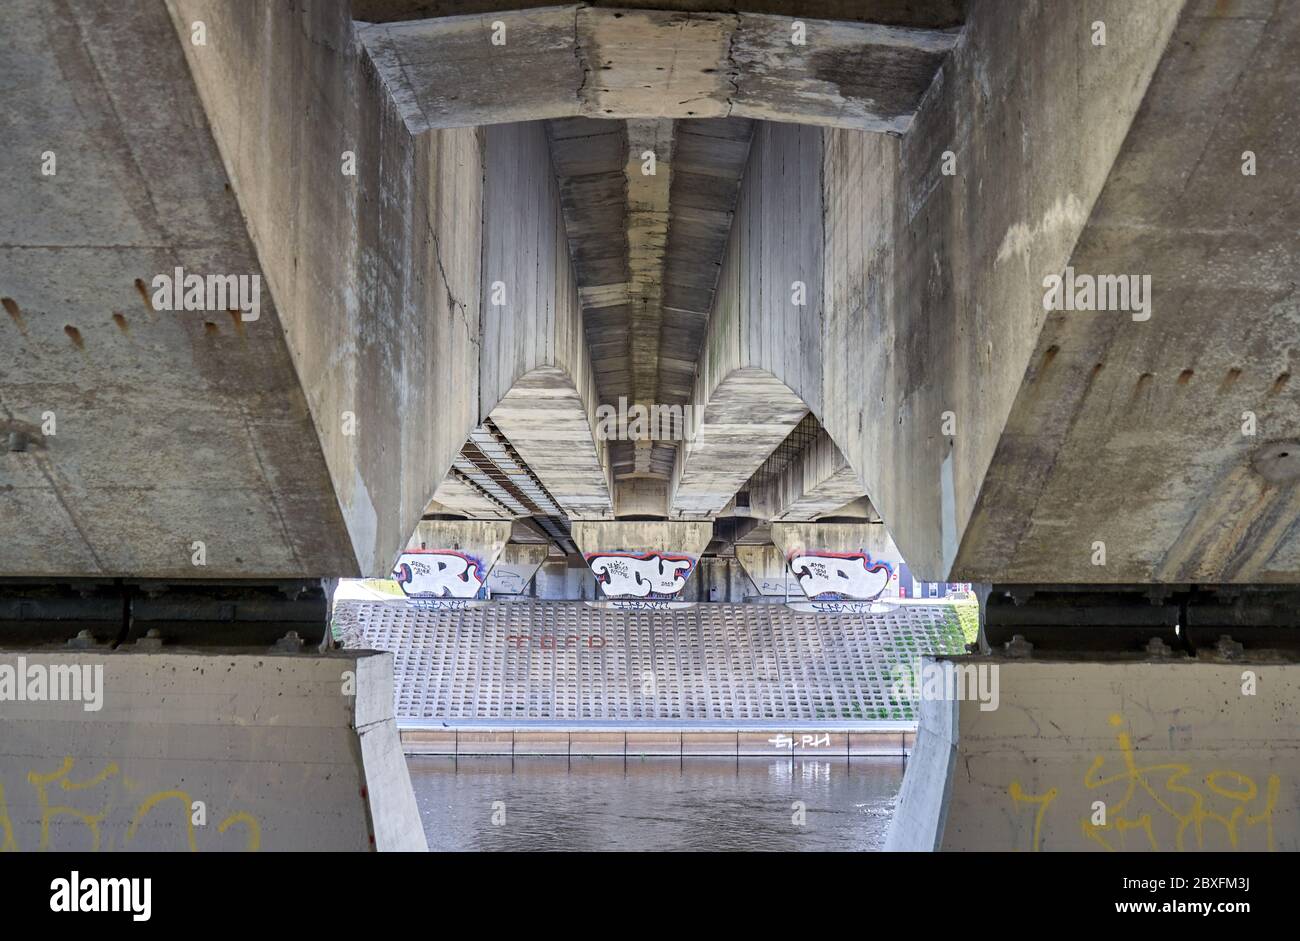 Massive concrete under bridge construction Stock Photo